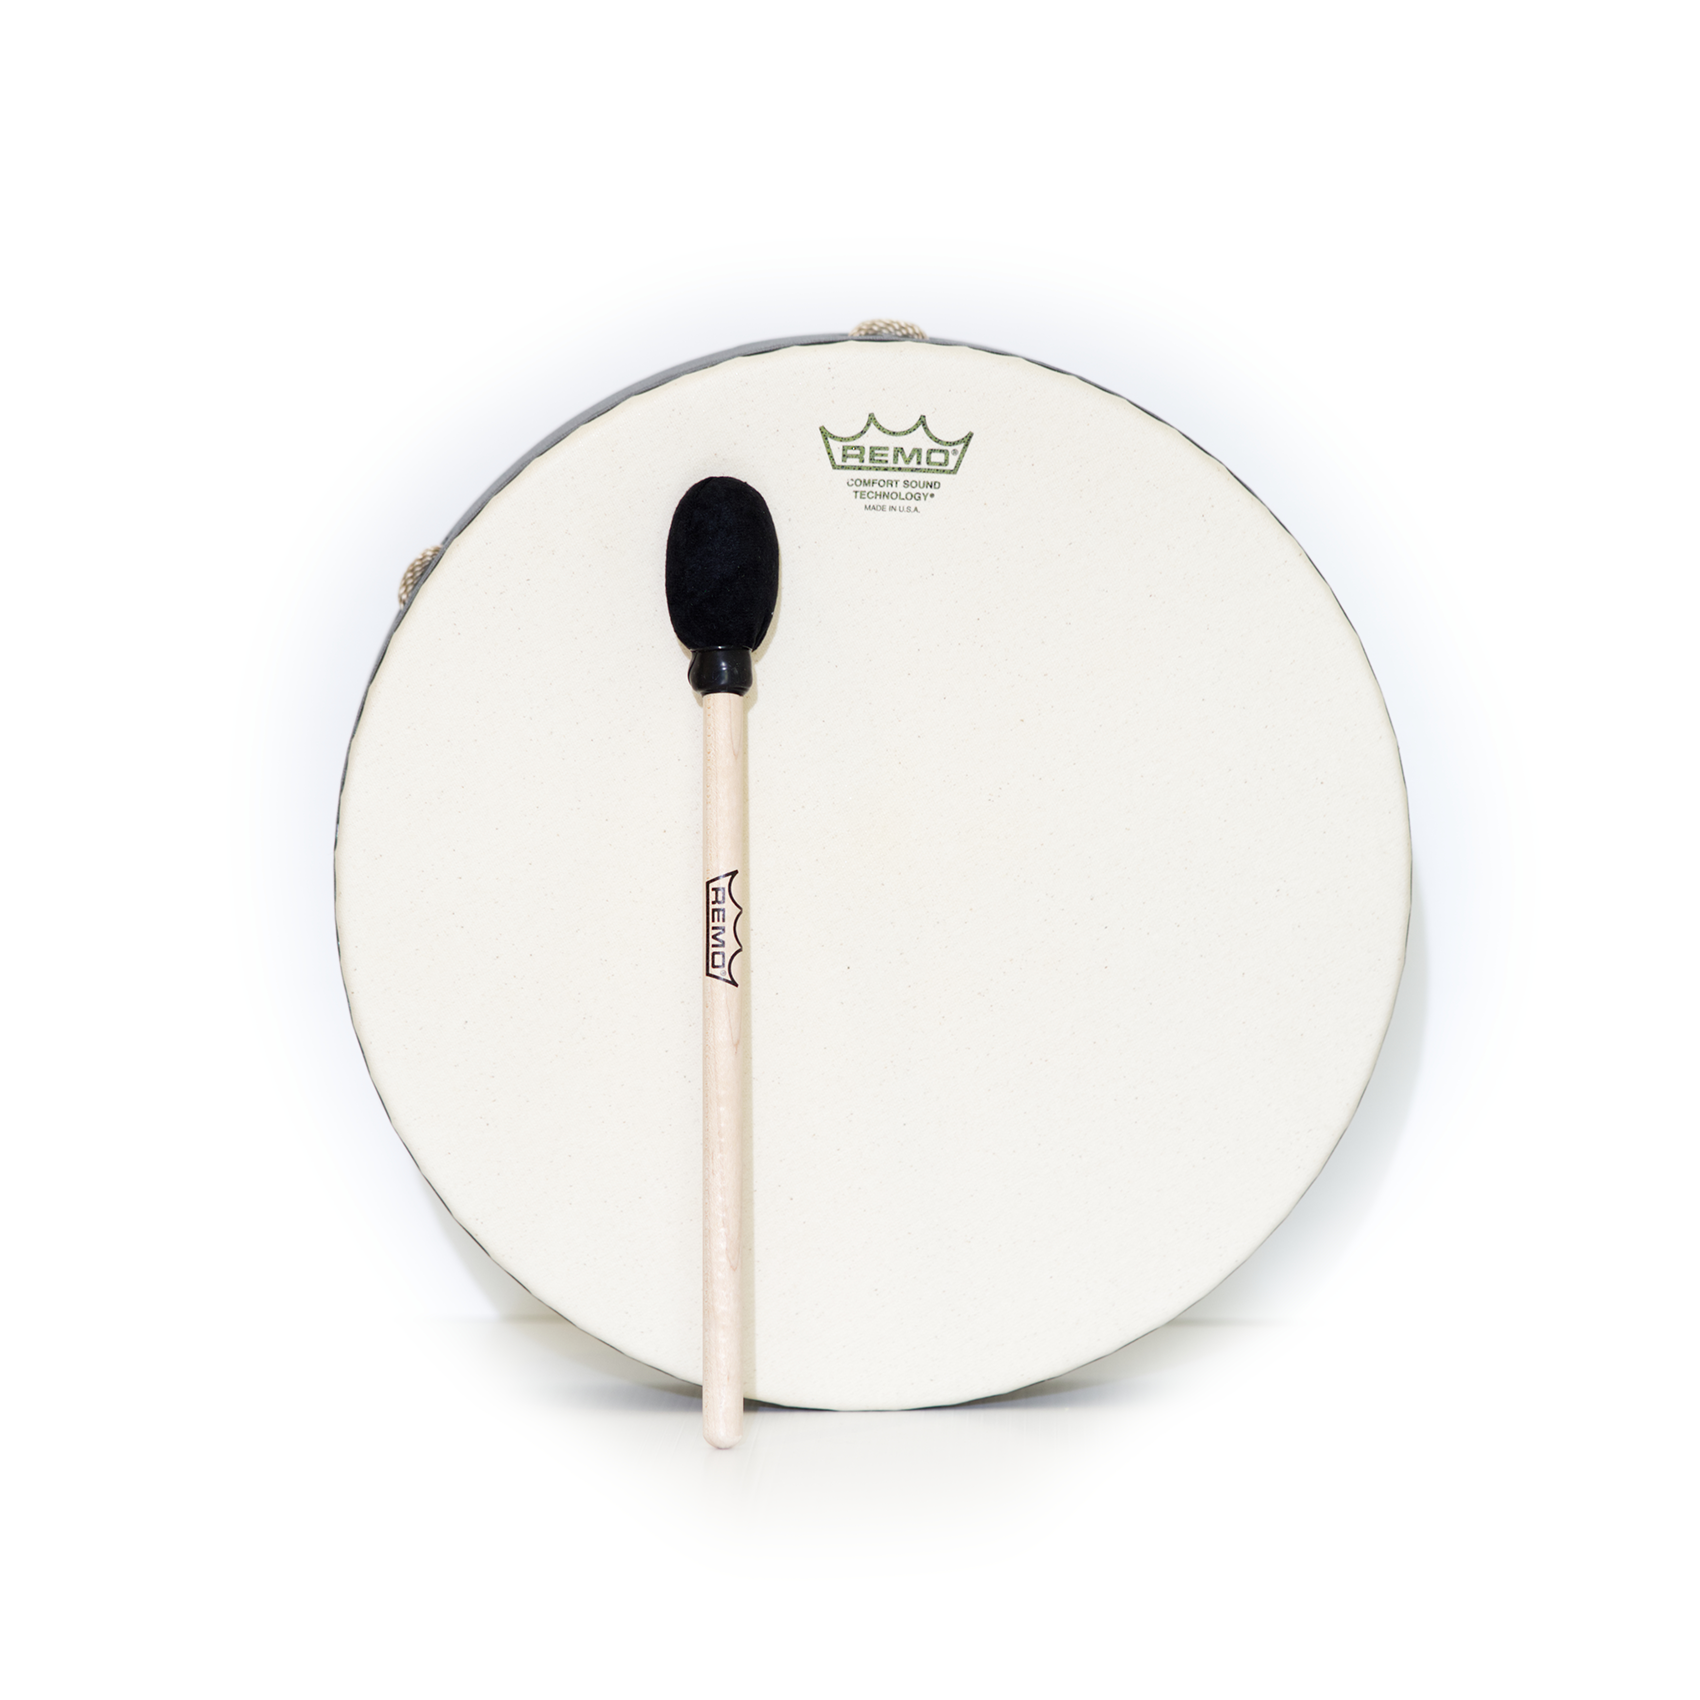 Son of drum - 14 Bahia Buffalo Drum w/Comfort Sound Technology ® Head